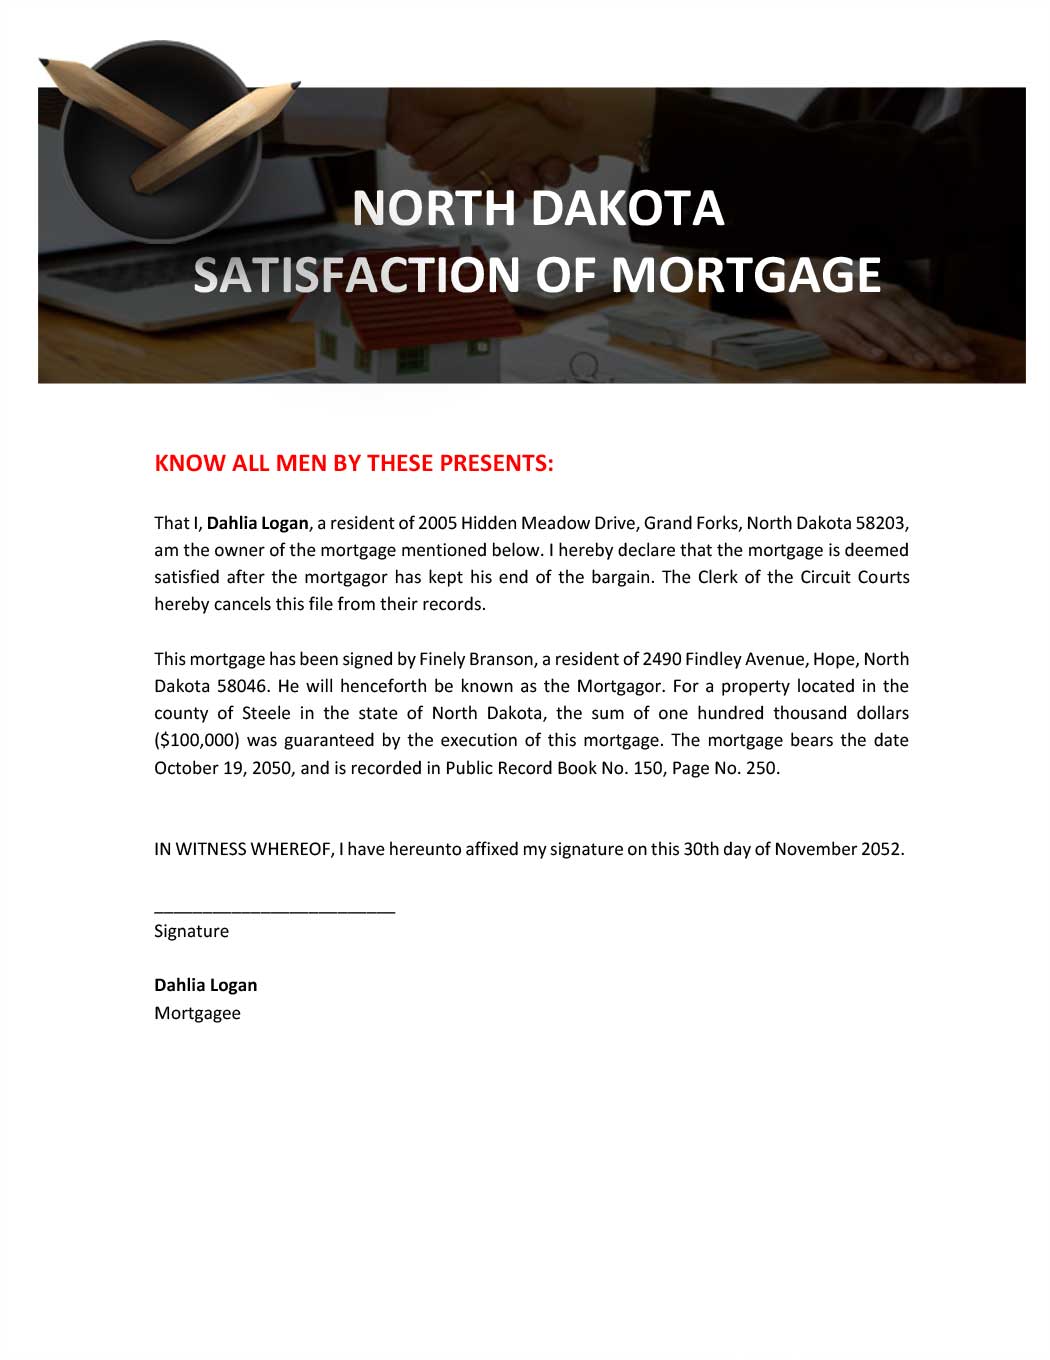 North Dakota Satisfaction Of Mortgage Template